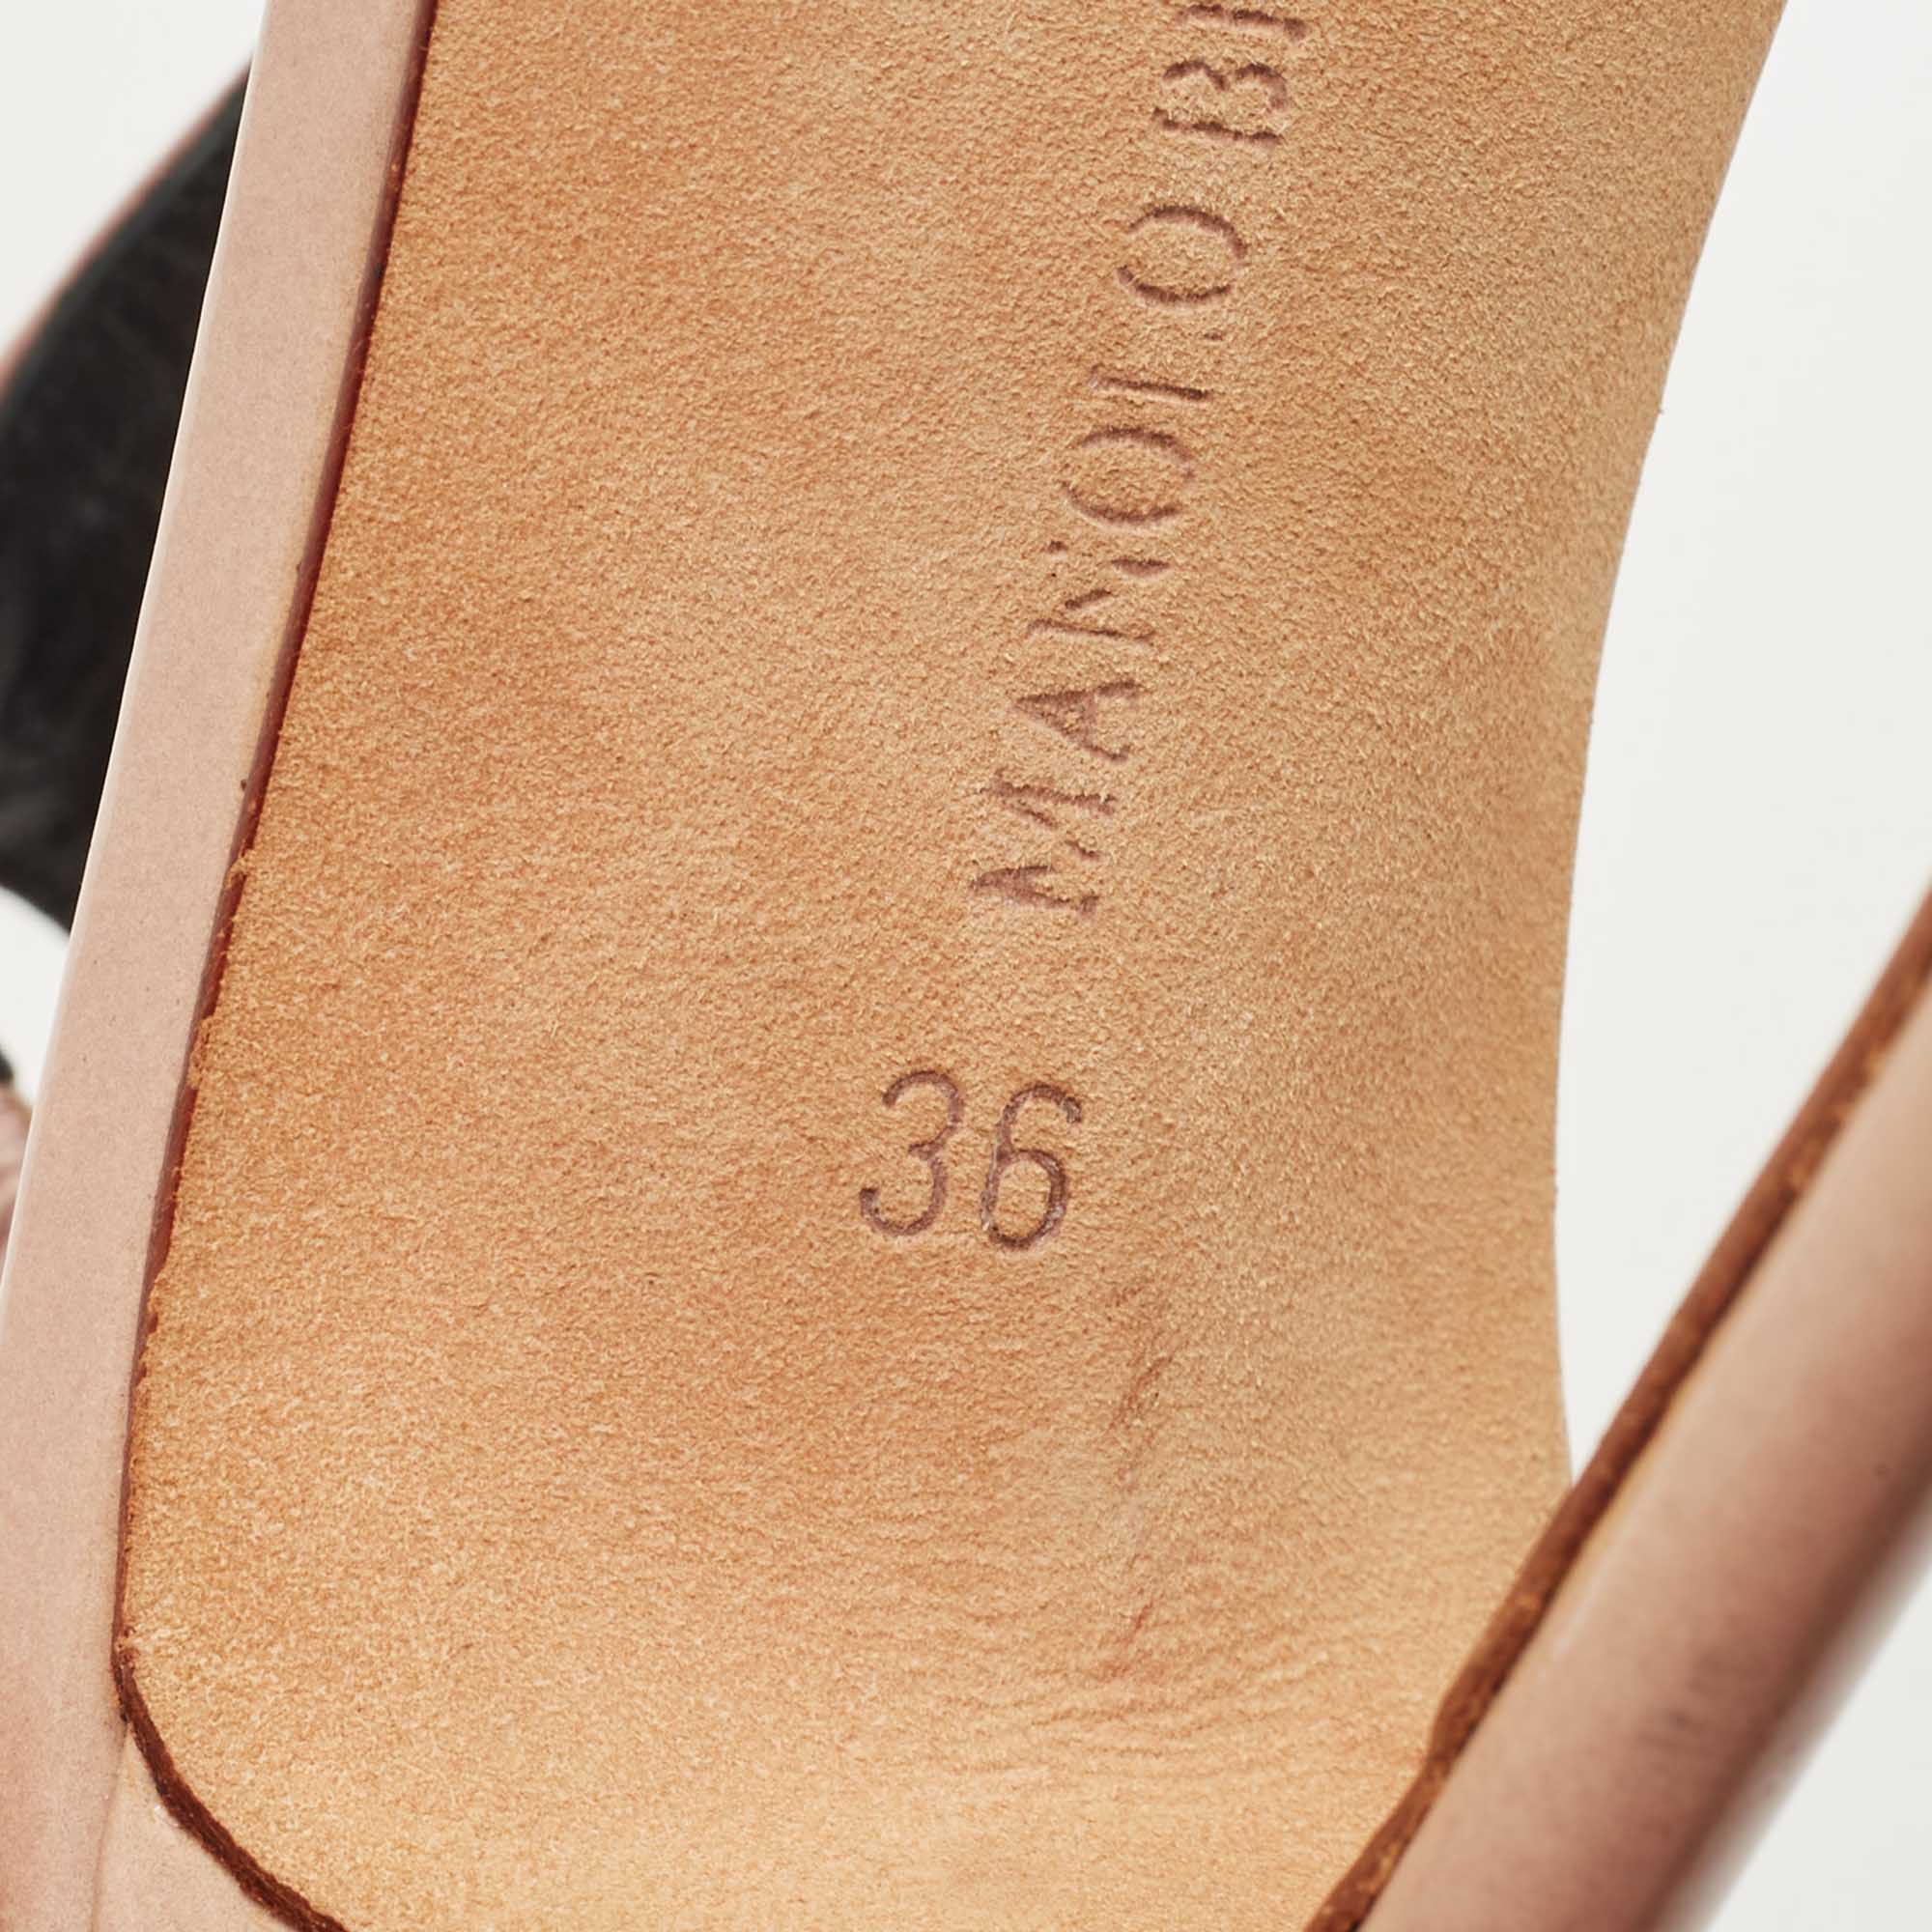 Manolo Blahnik Pink Patent Leather T-Bar Sandals Size 36